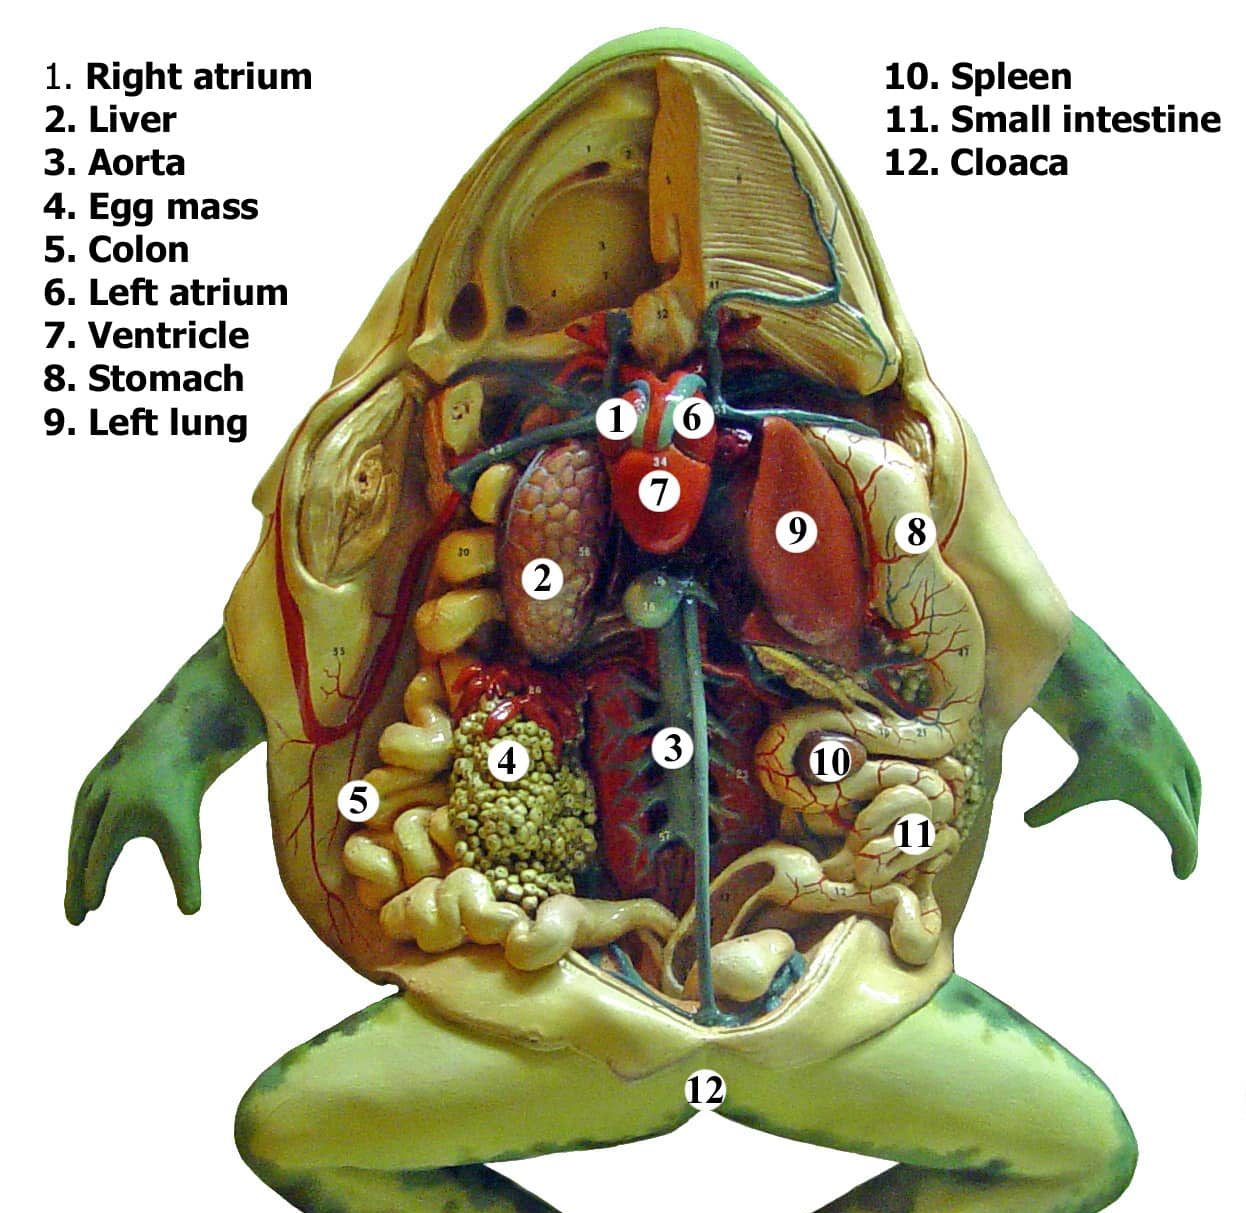 frog-dissection-labeled-diagram-lomishelf